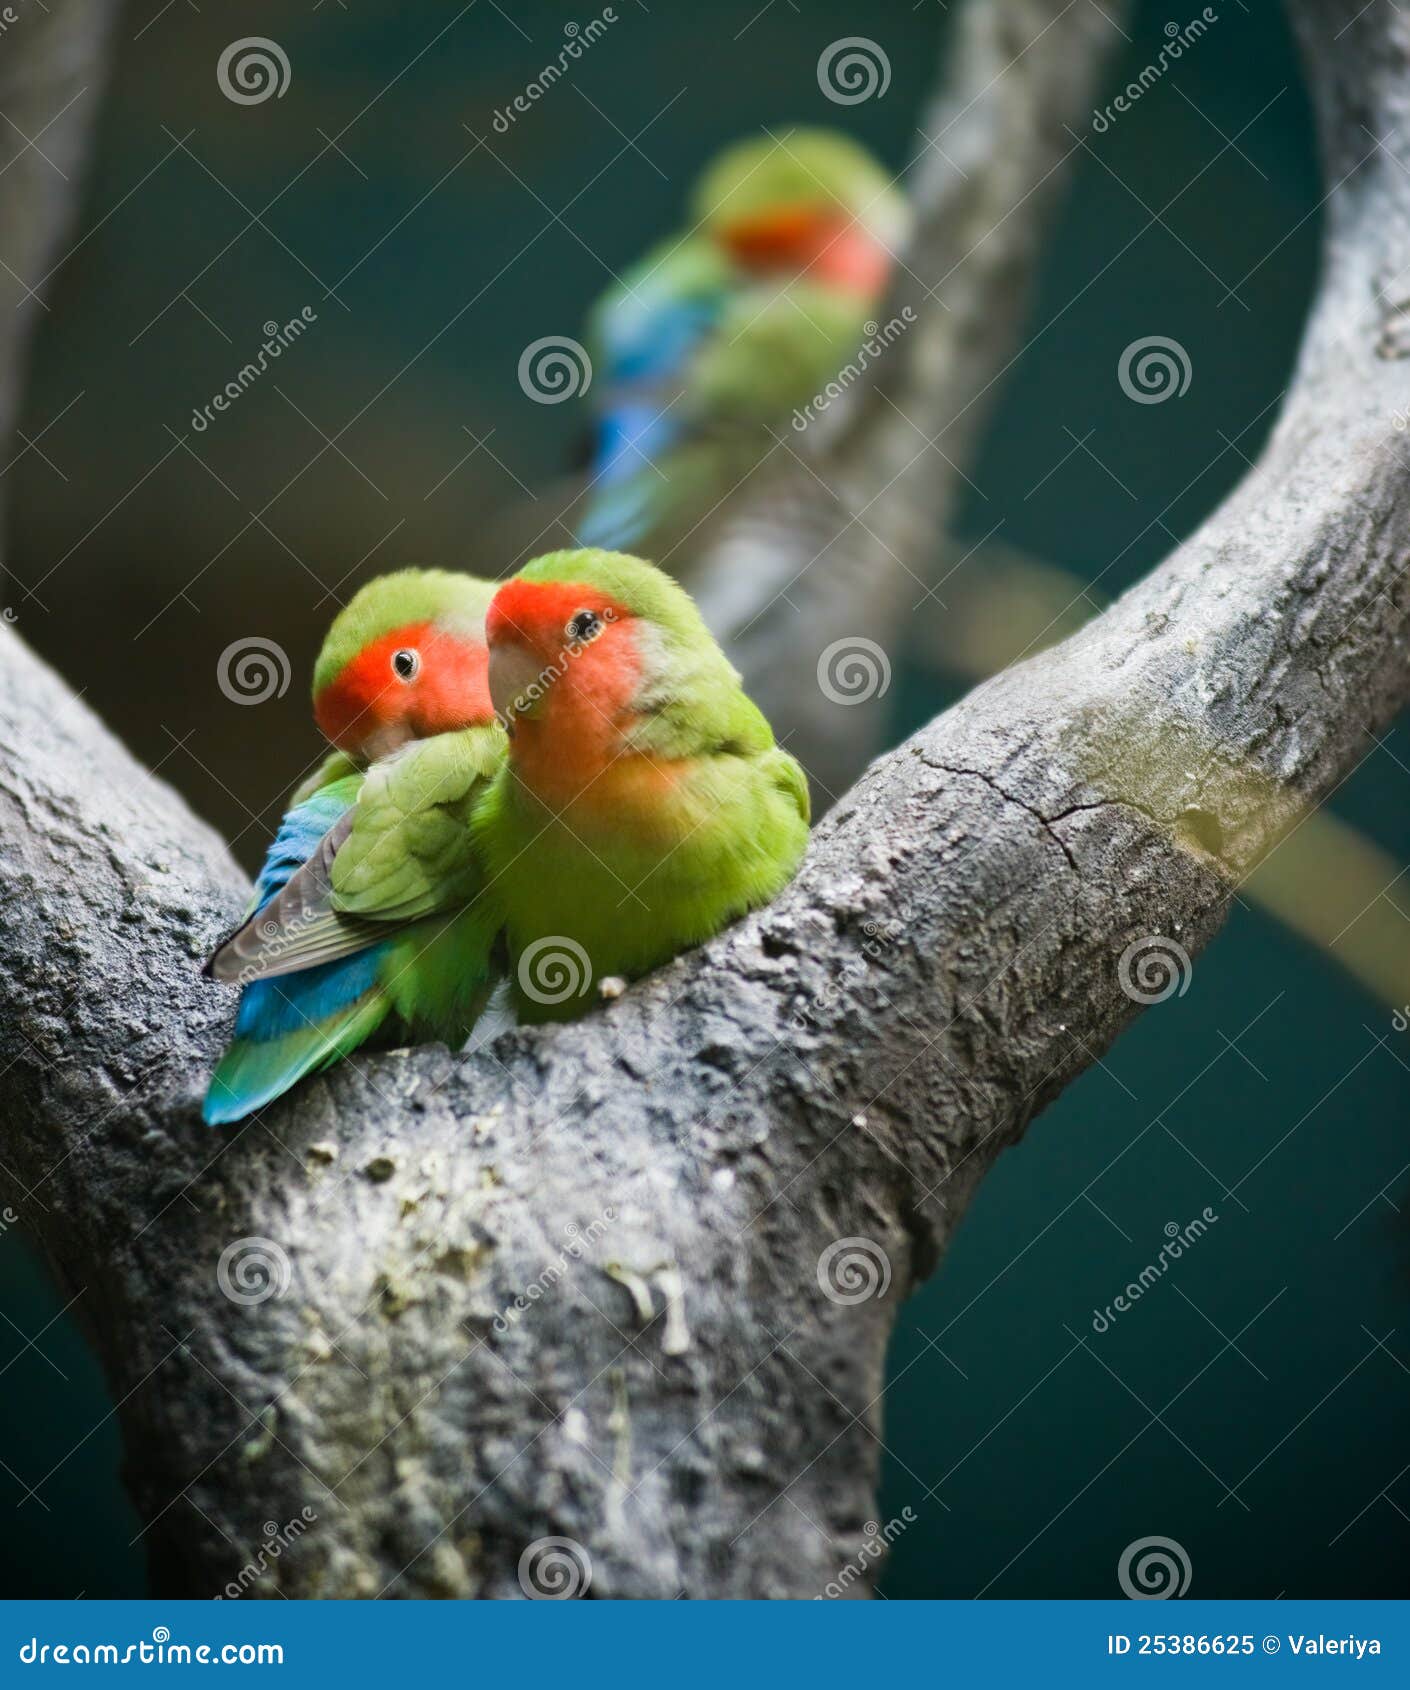 List 90+ Images rosy-faced lovebird male and female Full HD, 2k, 4k